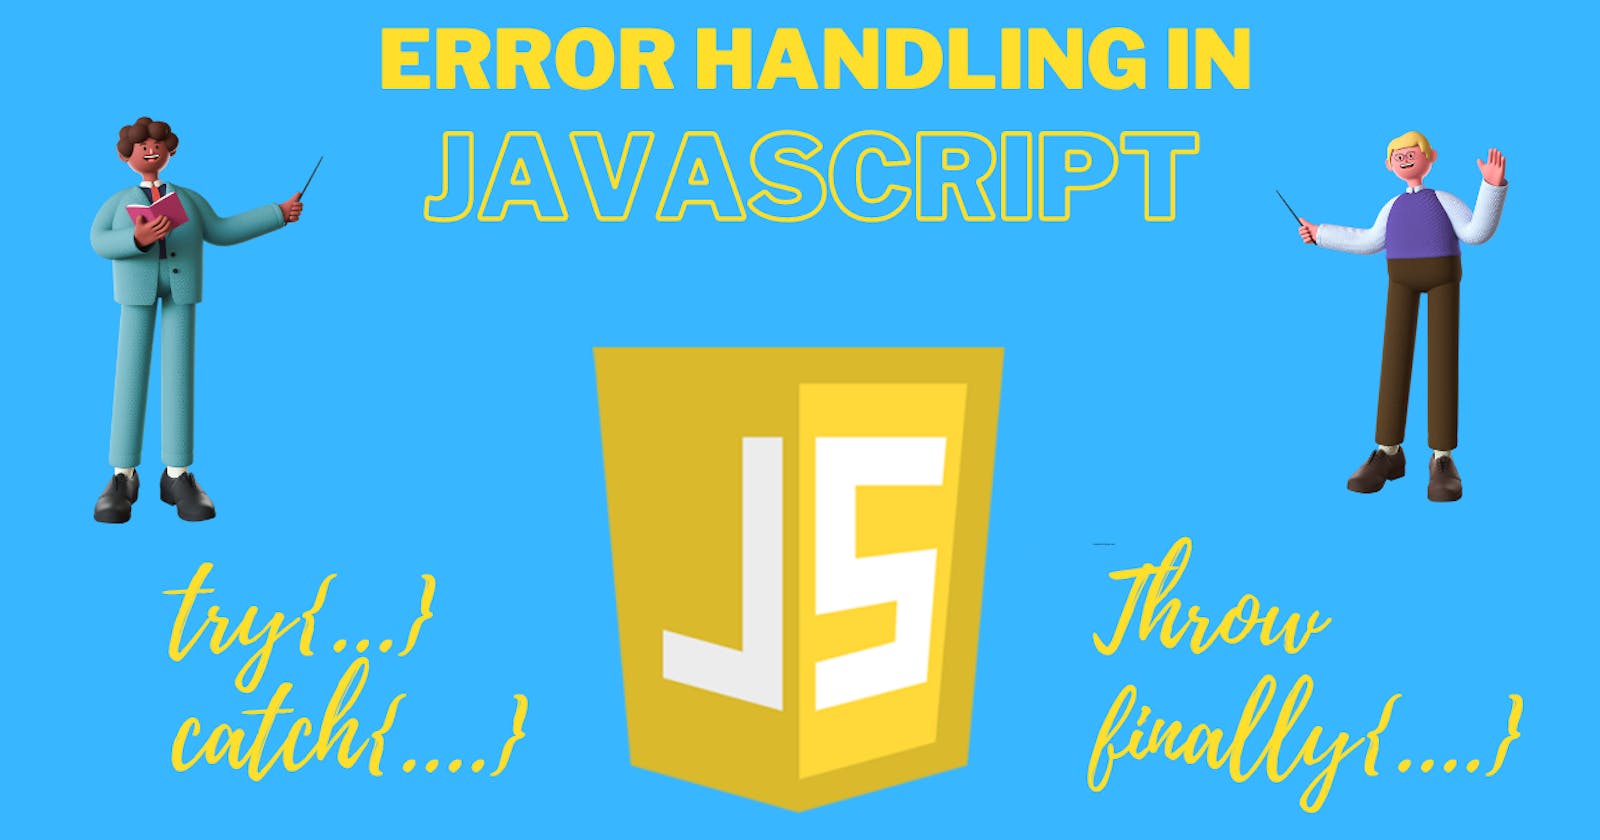 Handling errors in Javascript